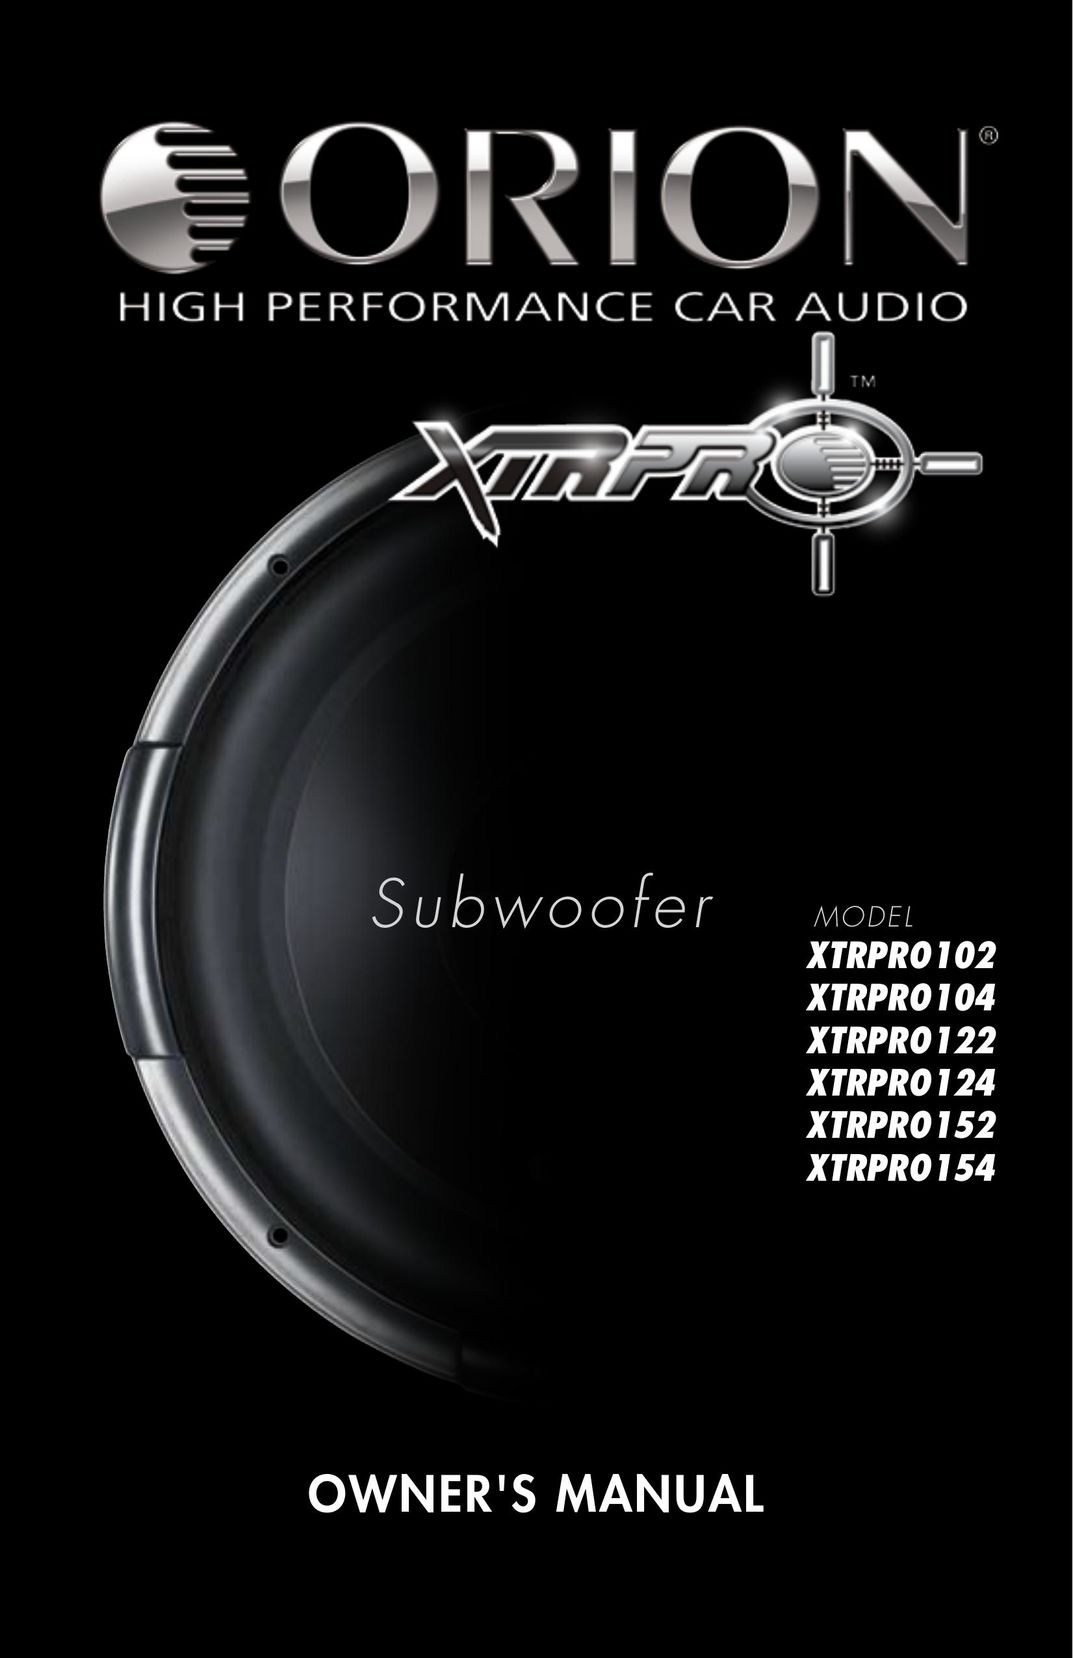 Orion Car Audio XTRPRO122 Speaker User Manual